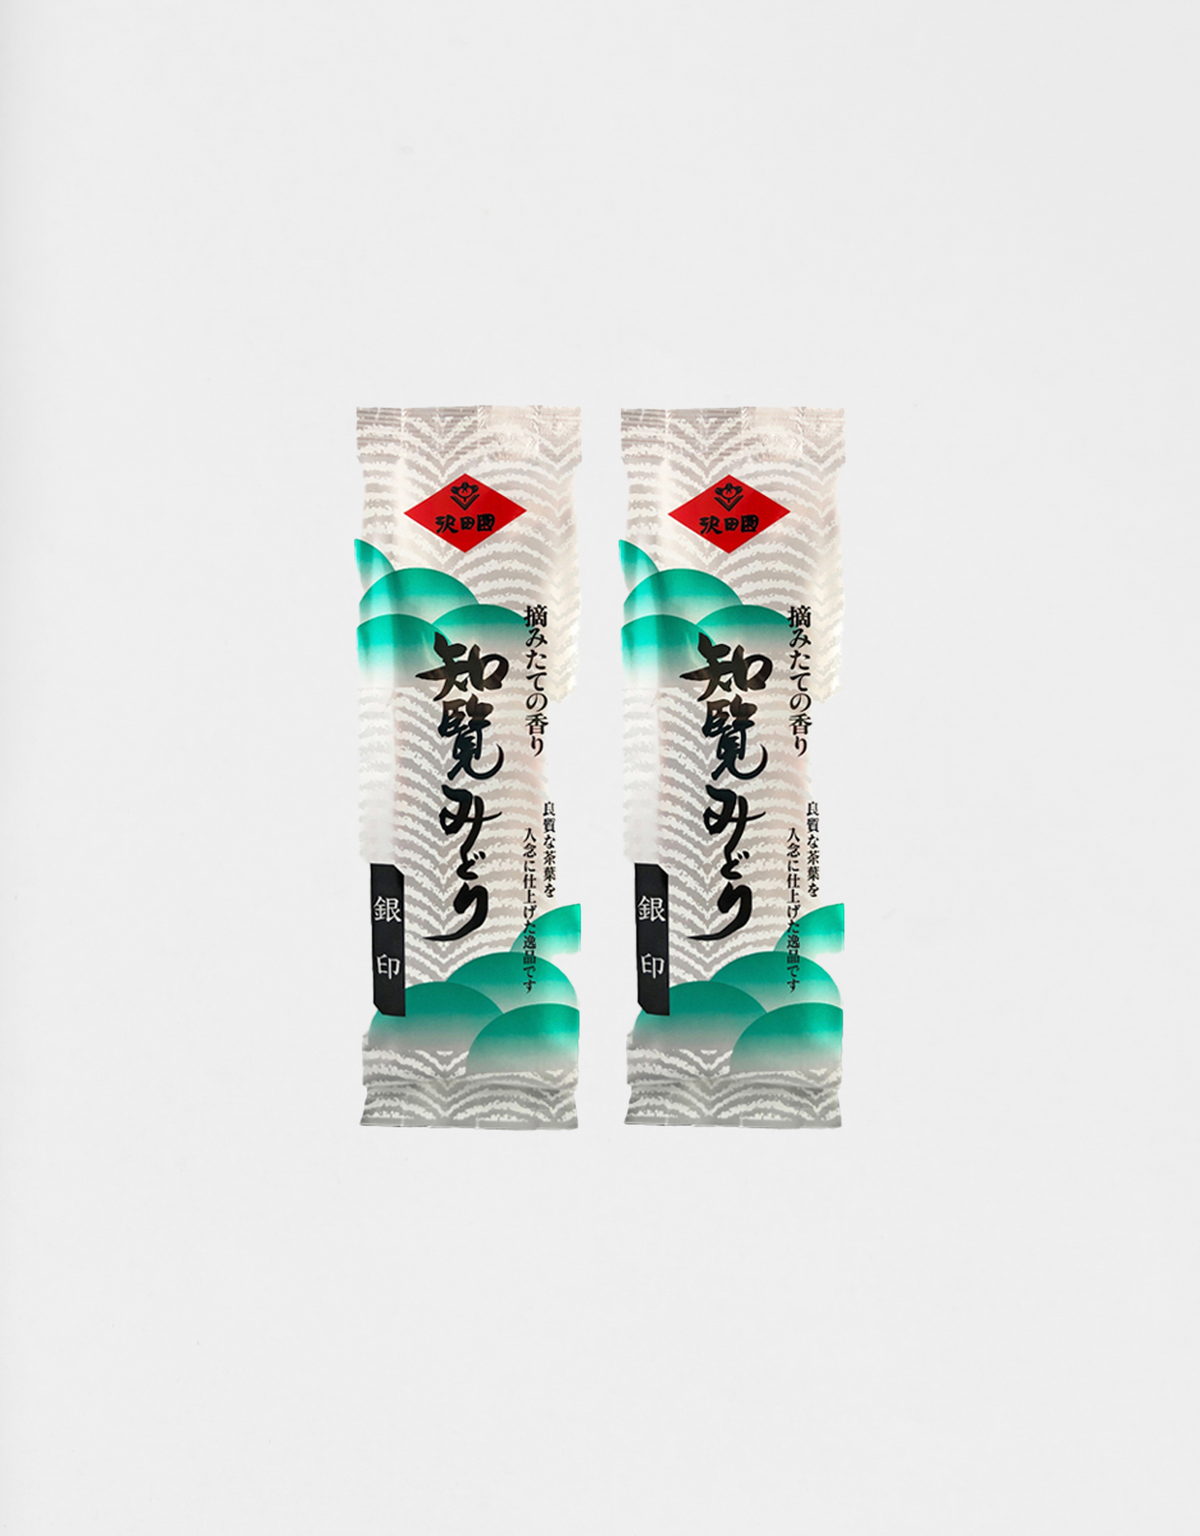 "Kuk's sharp taste! Just exhilarating! ] 2 Chiran Midori Ginjirushi (100g x 2)